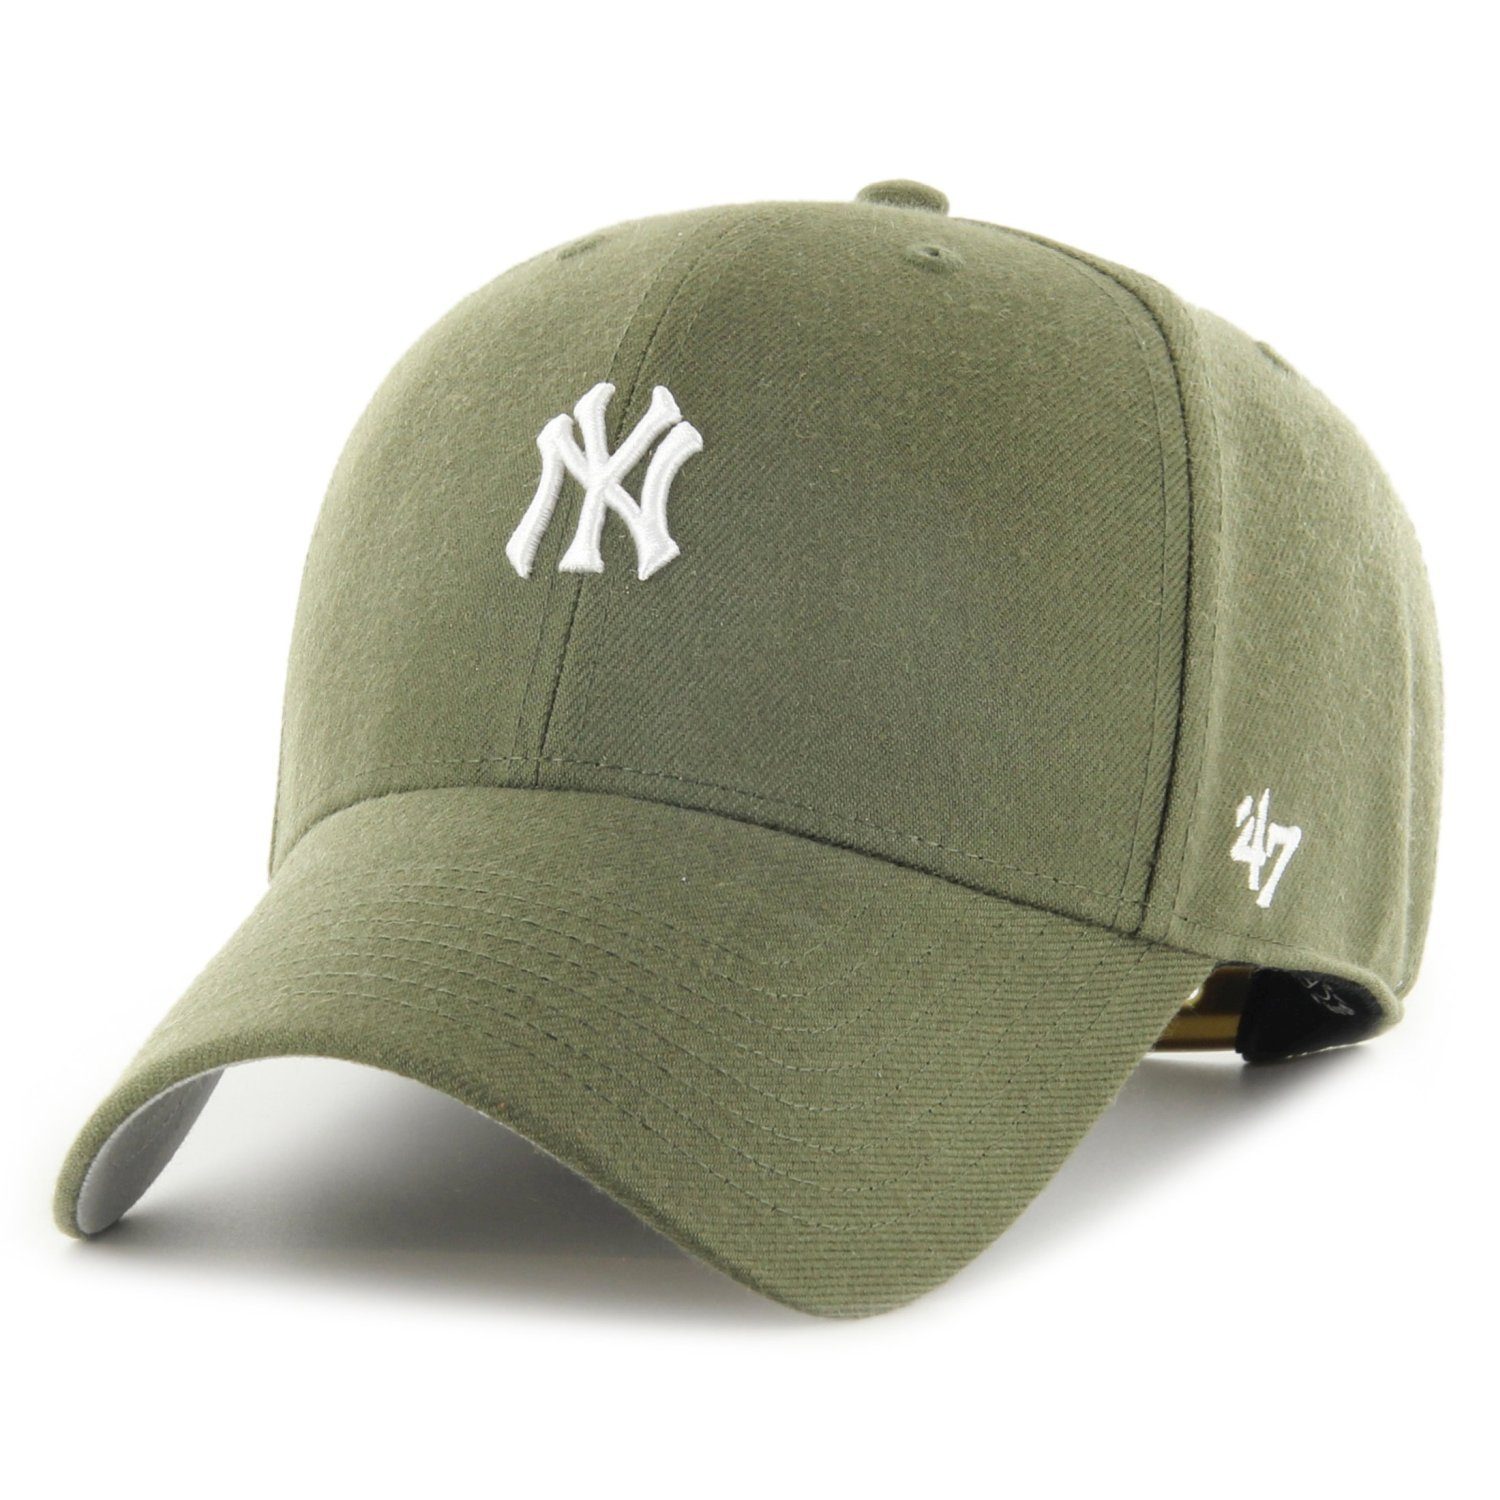 x27;47 Brand Snapback Cap RUNNER New Yankees York BASE